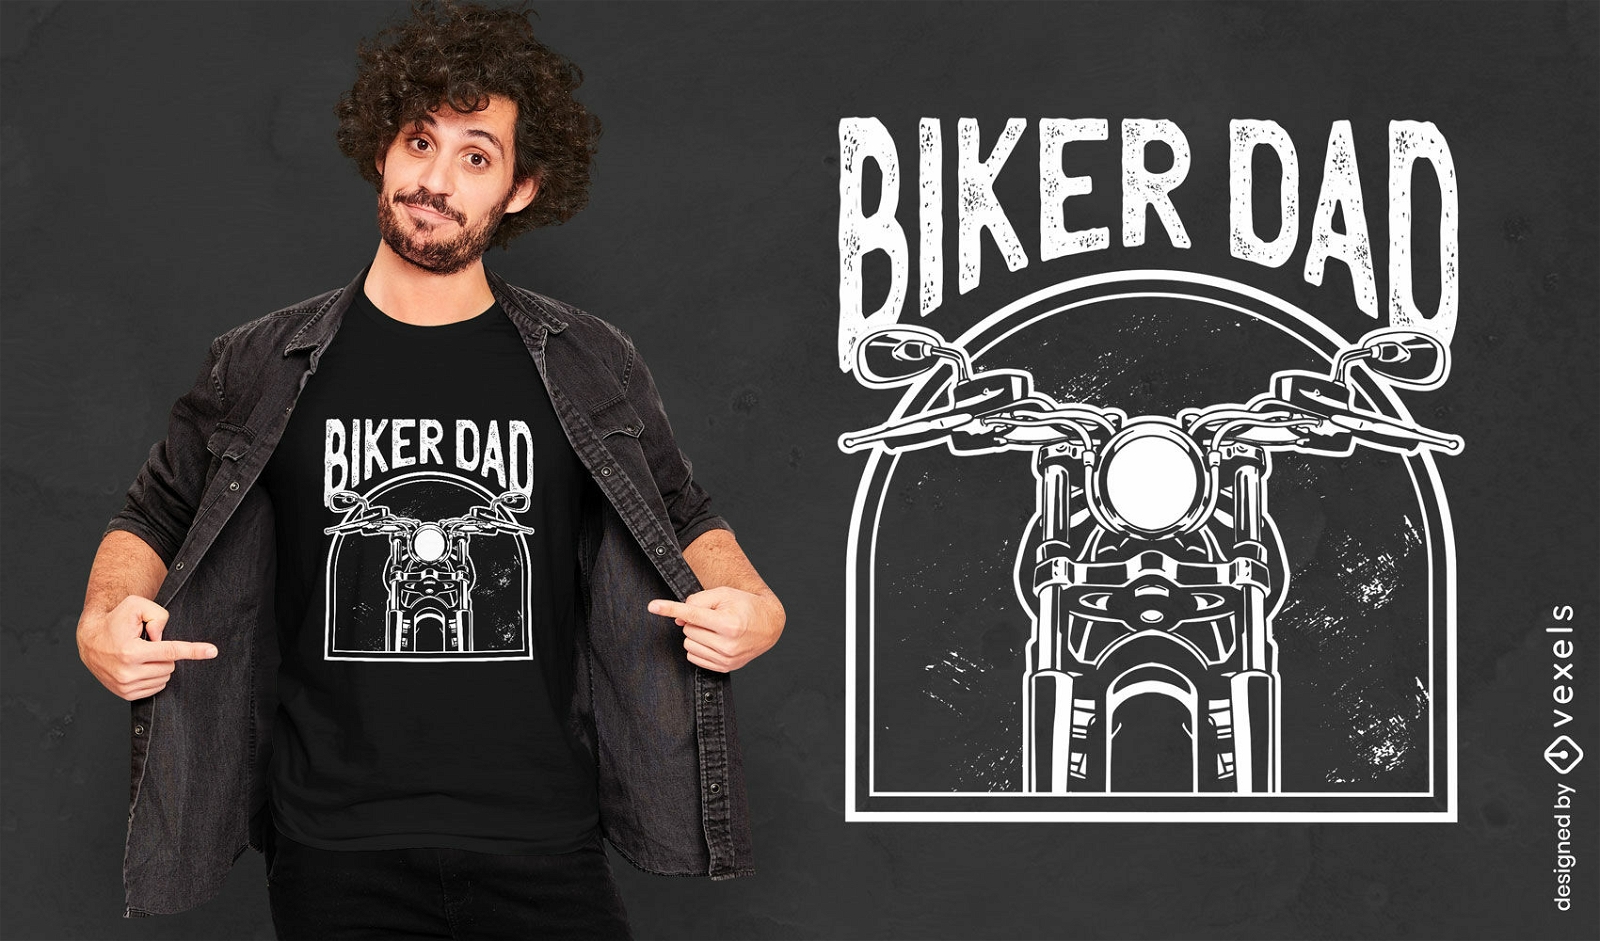 Biker dad motorcycle t-shirt design